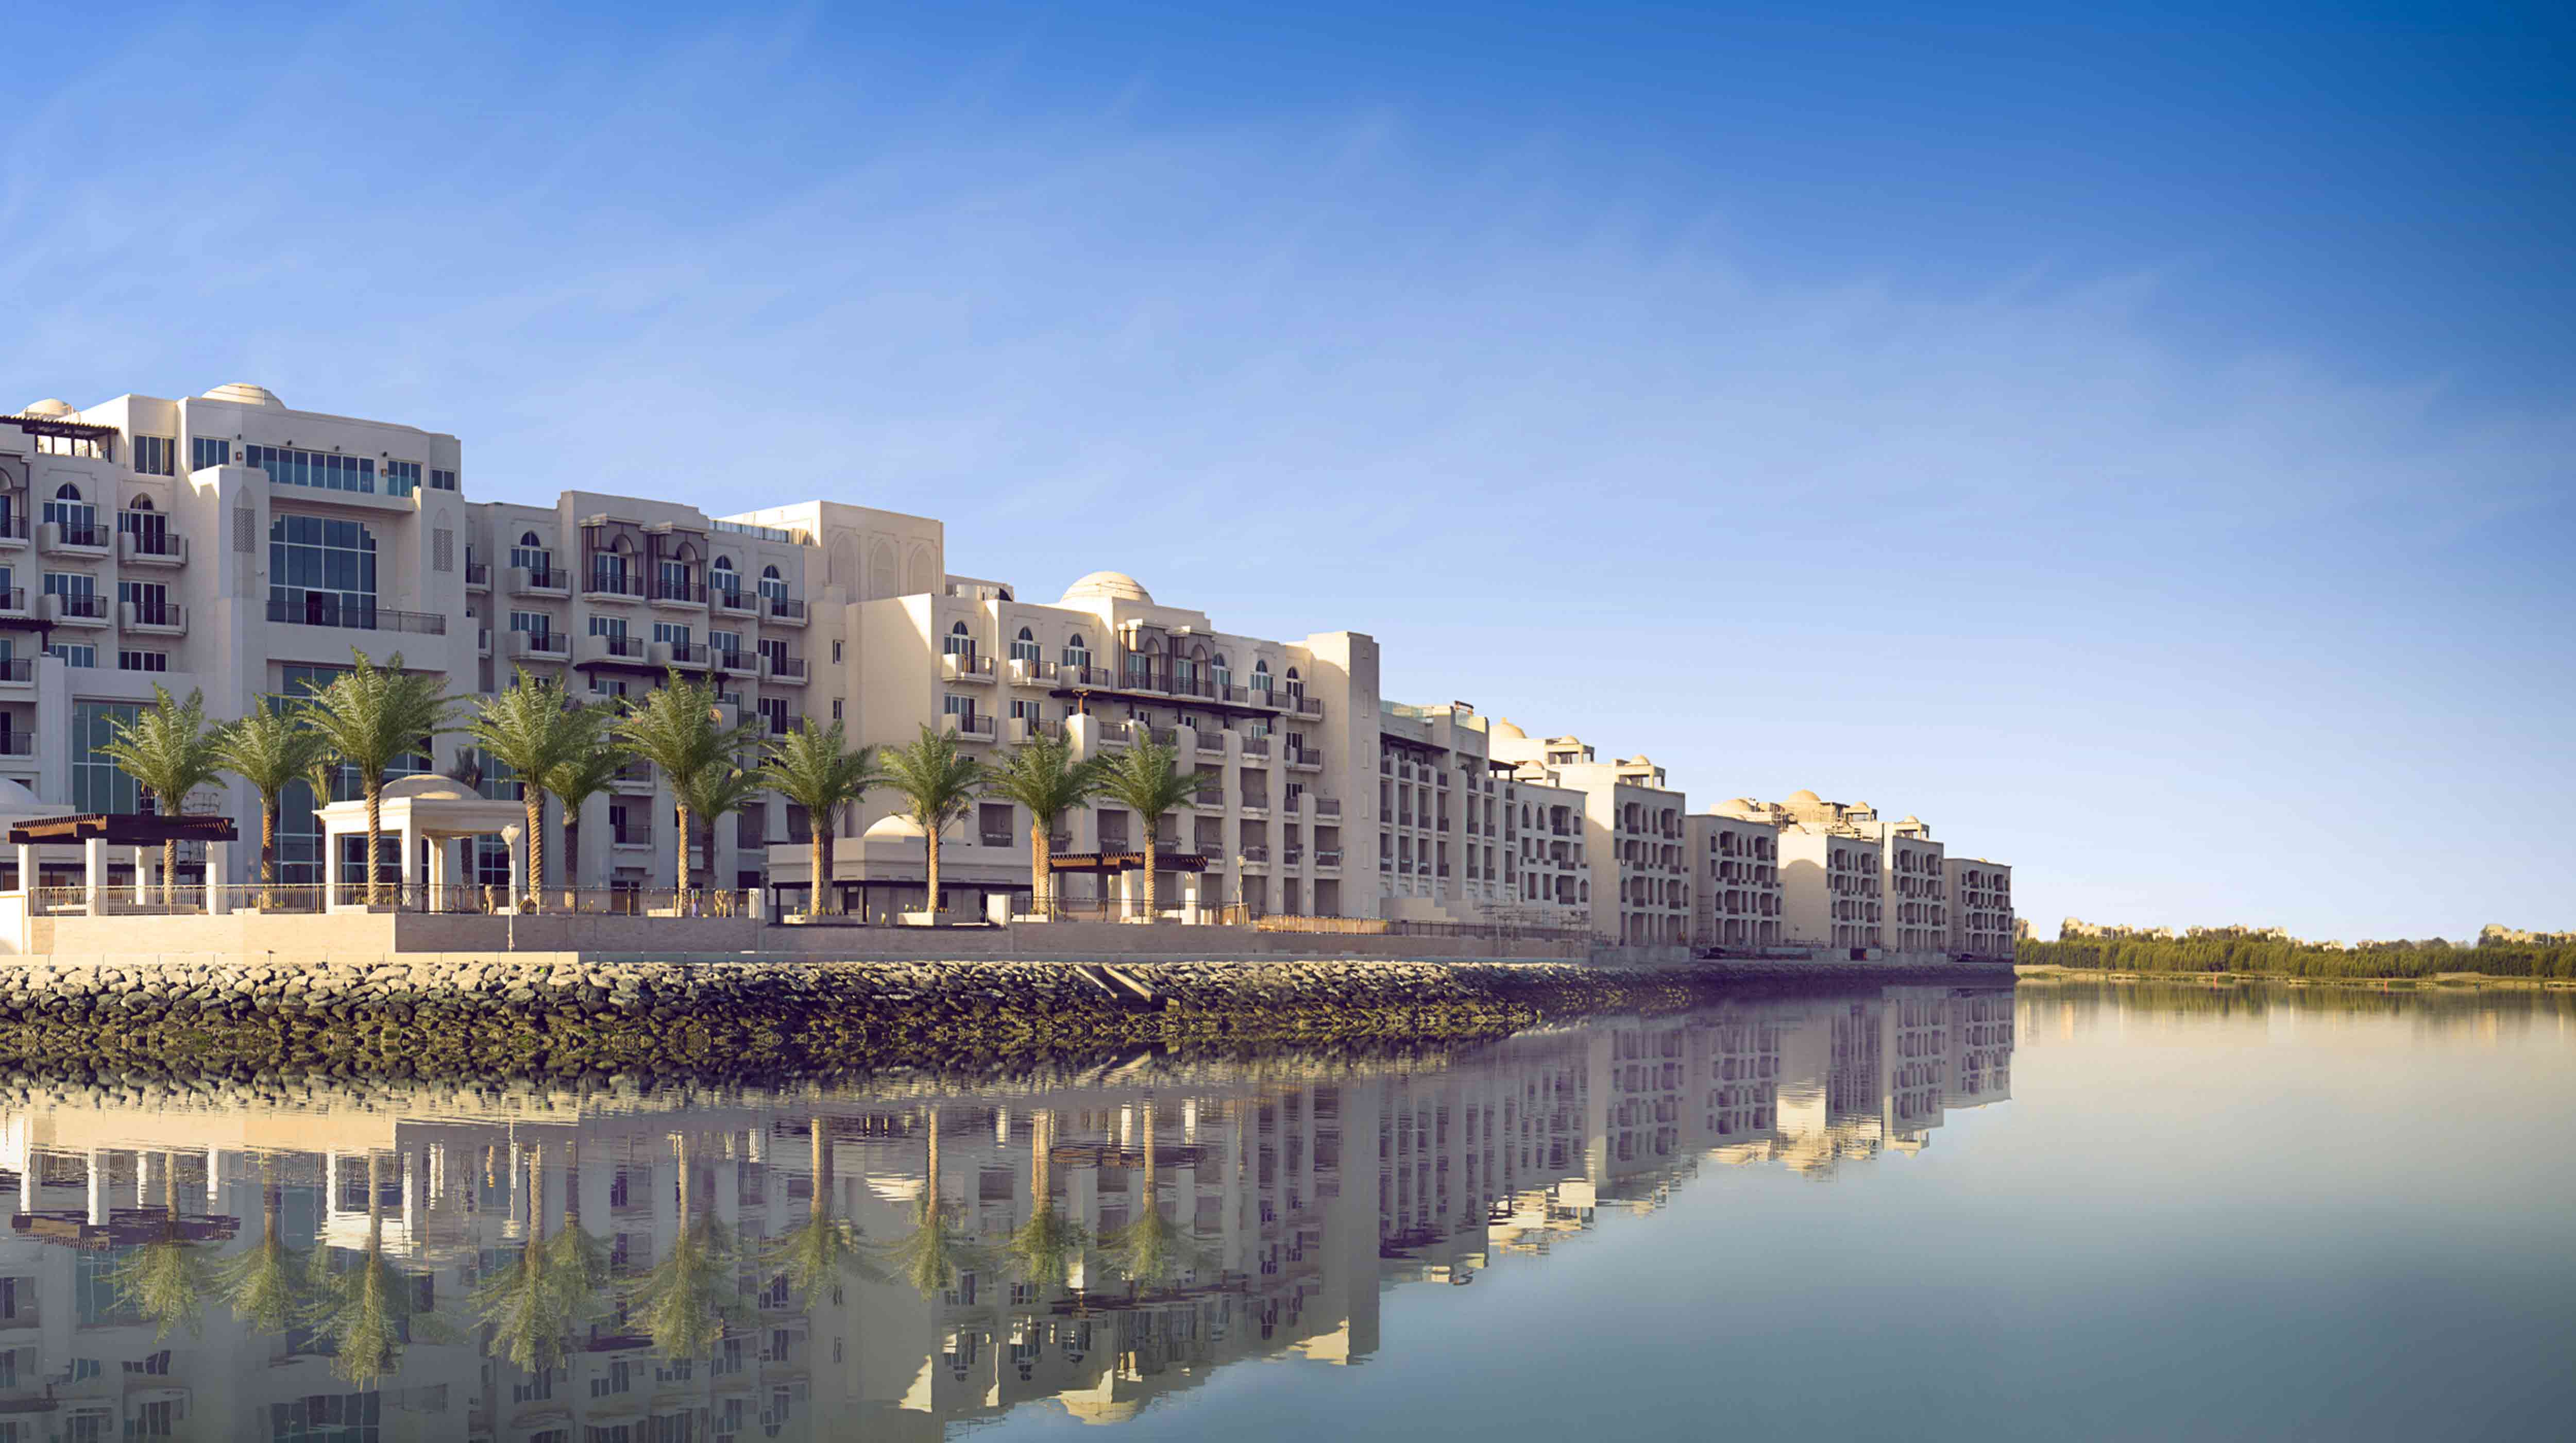 Vista al hotel Anantara Eastern Mangroves ad Abu Dhabi davanti al mare.